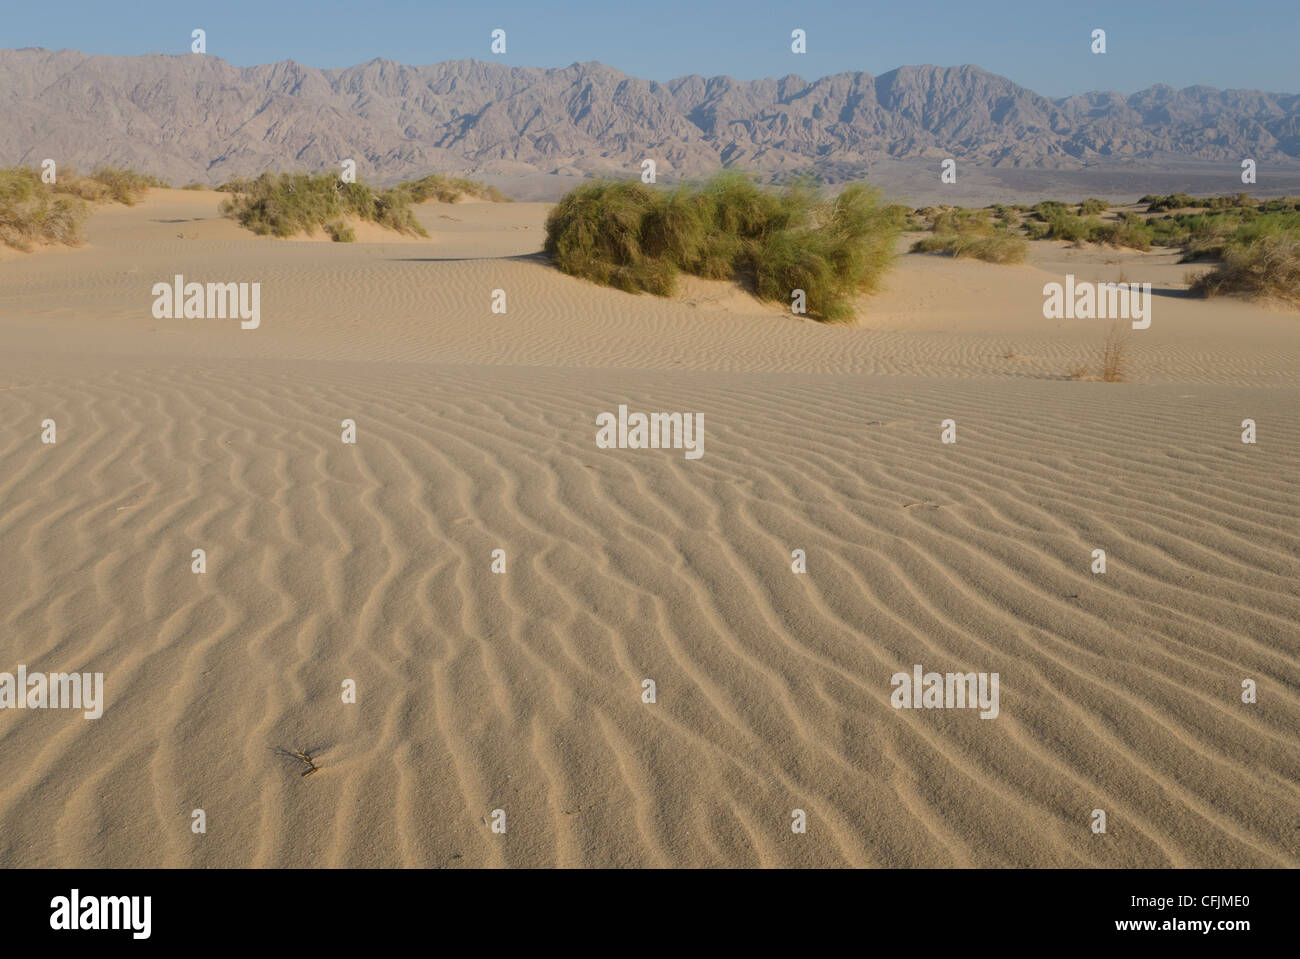 Les dunes de sable de Samar, vallée de l'Arava, Israël, Moyen Orient Banque D'Images